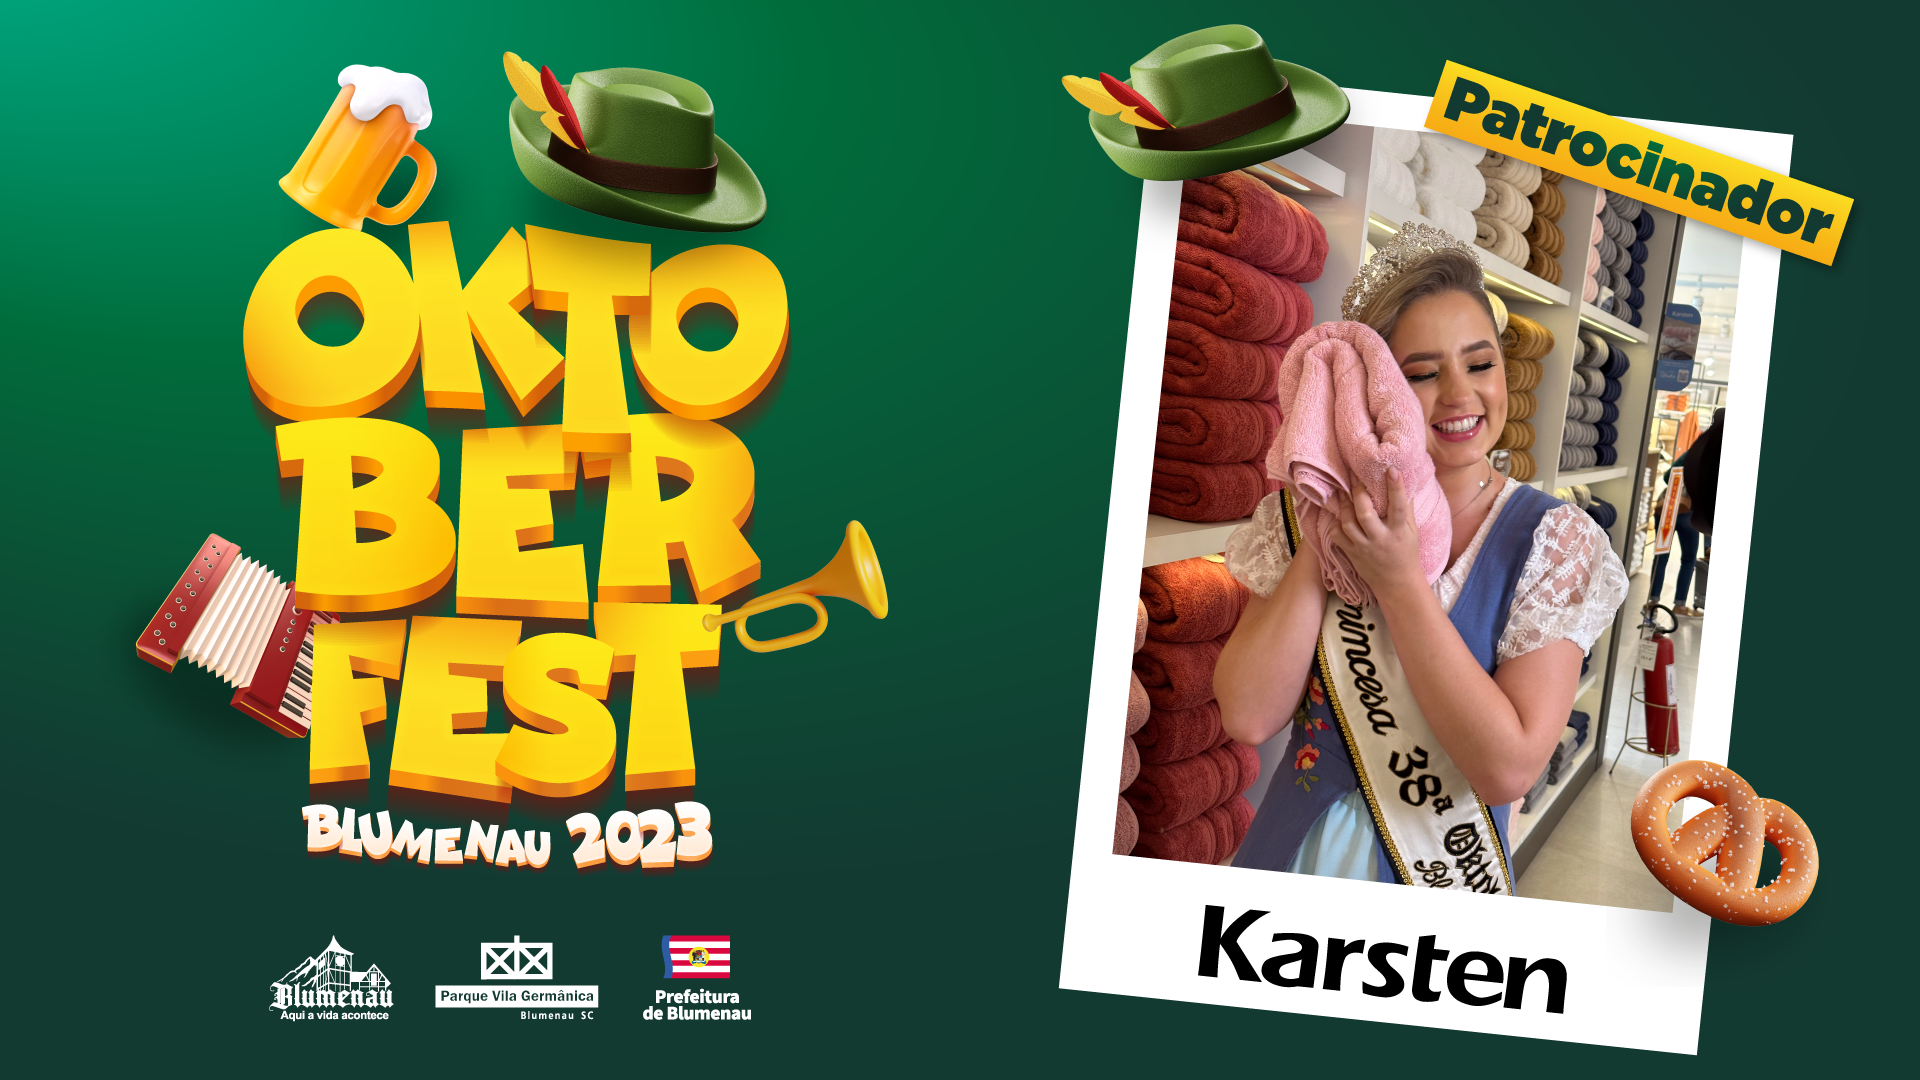 Karsten mais uma vez presente na Oktoberfest Blumenau